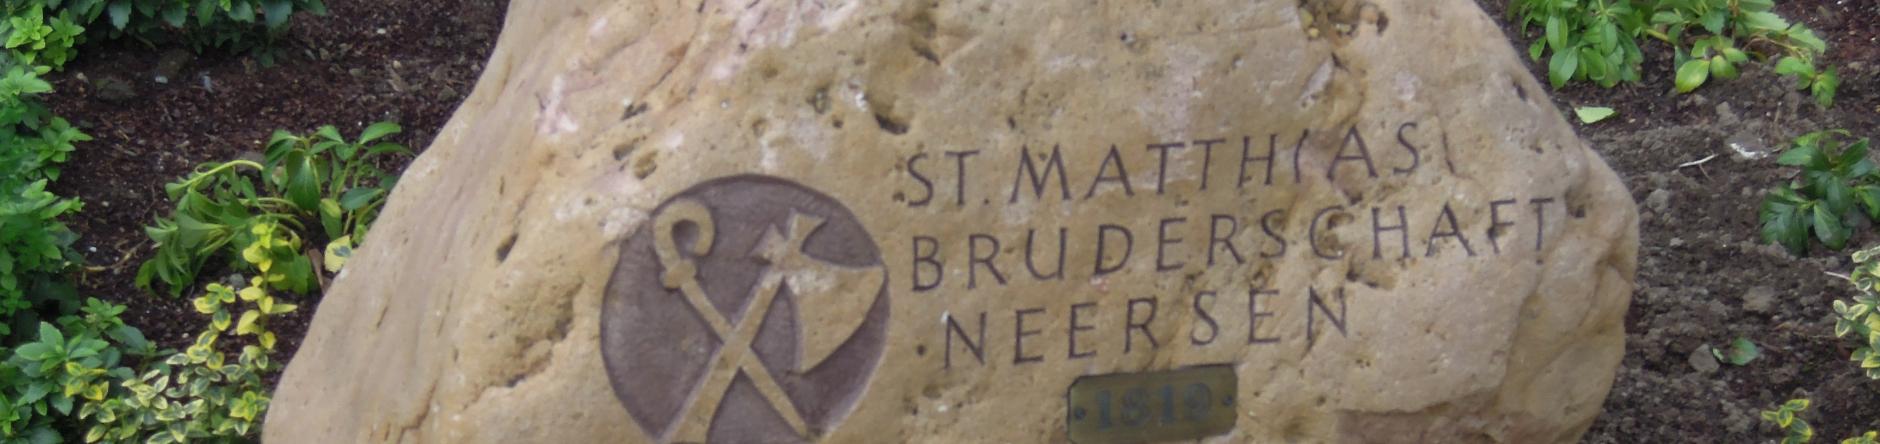 St. Matthias Bruderschaft Neersen